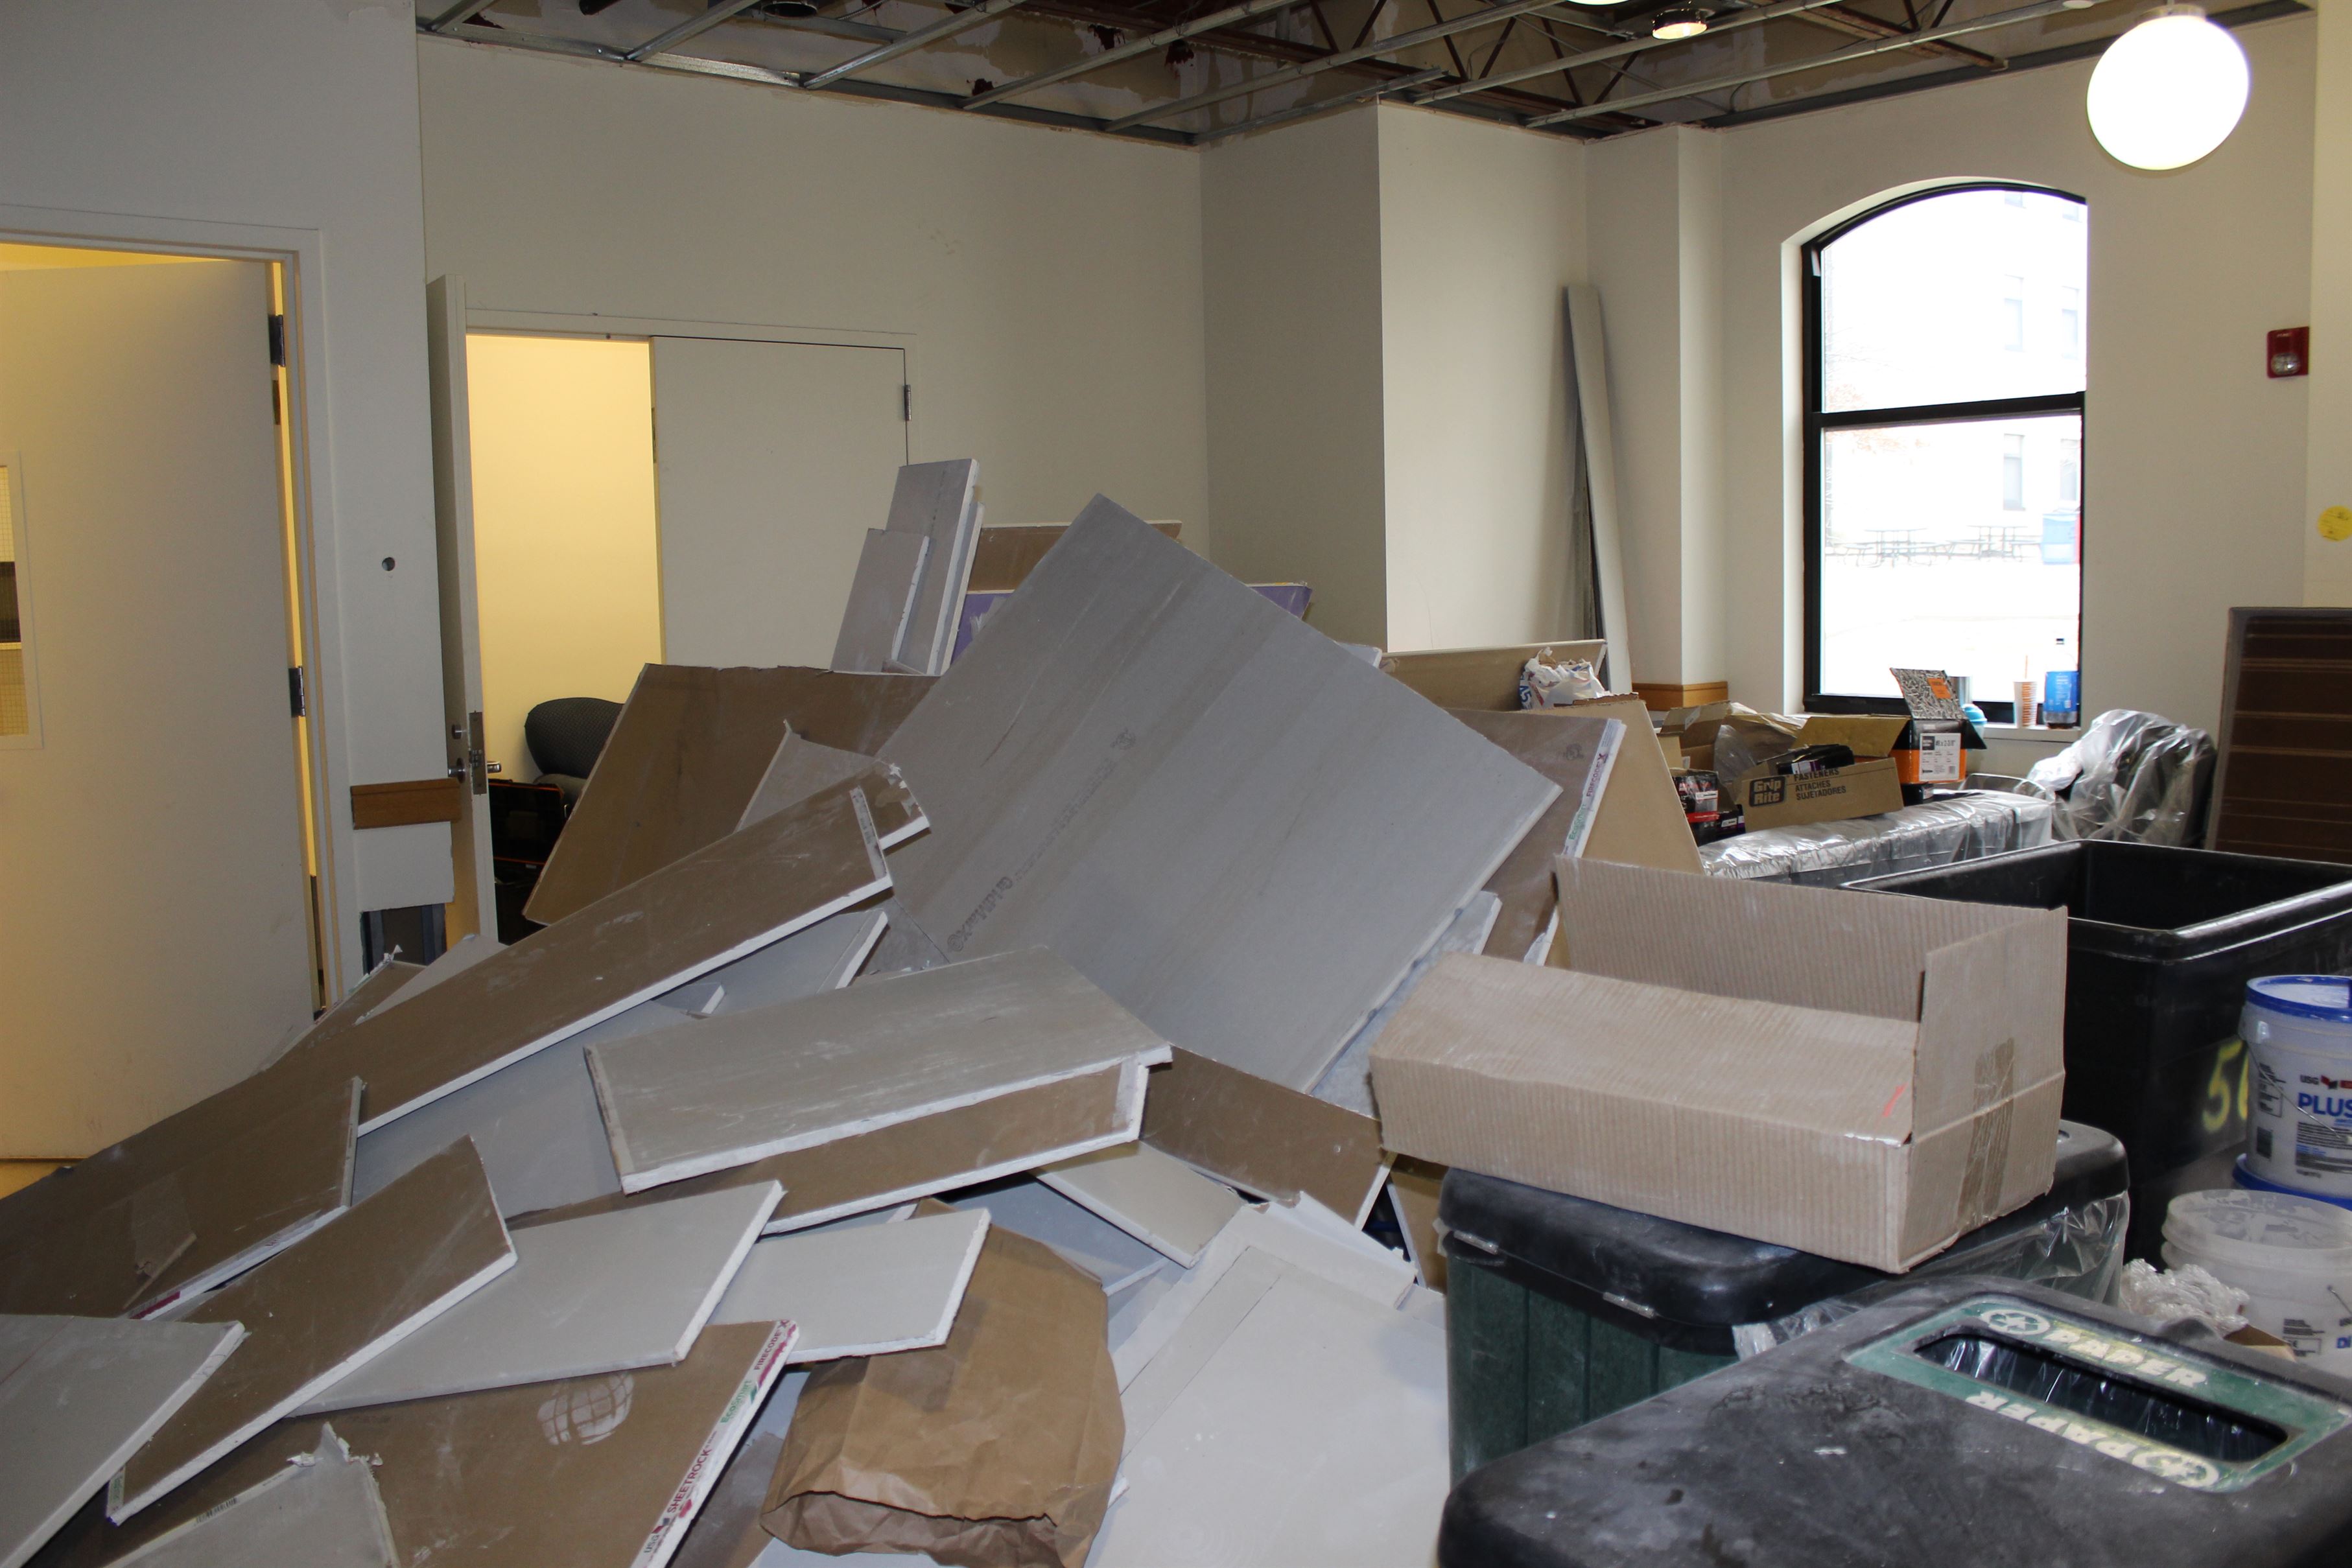 Debris in Williams Hall's first floor common area.